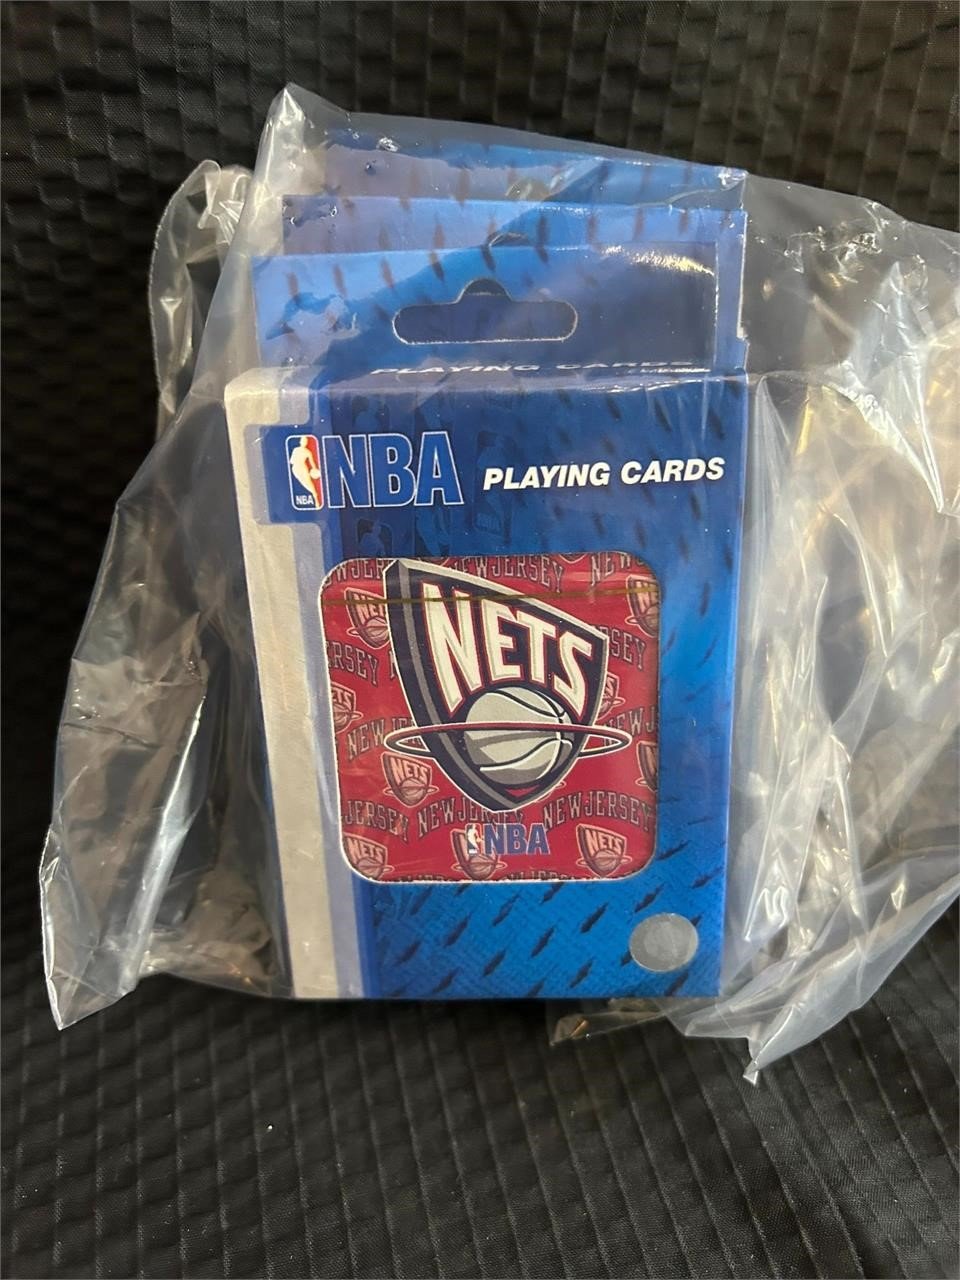 Three Decks of NBA "Nets" Playing Cards